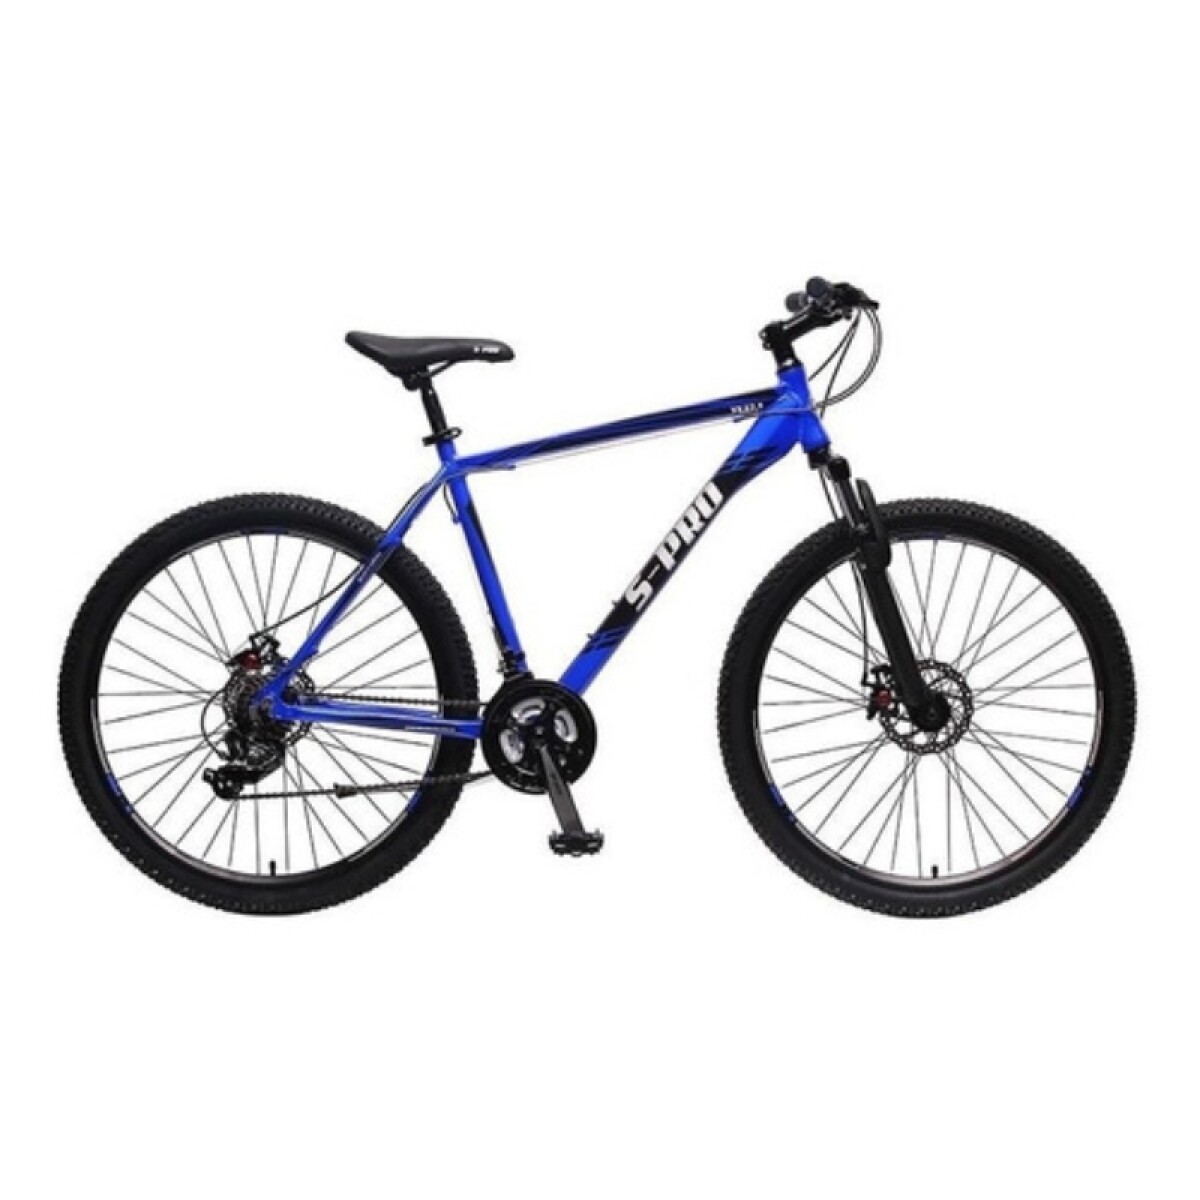 Bicicleta S-pro Mtb Vx R.27.5 - Azul 